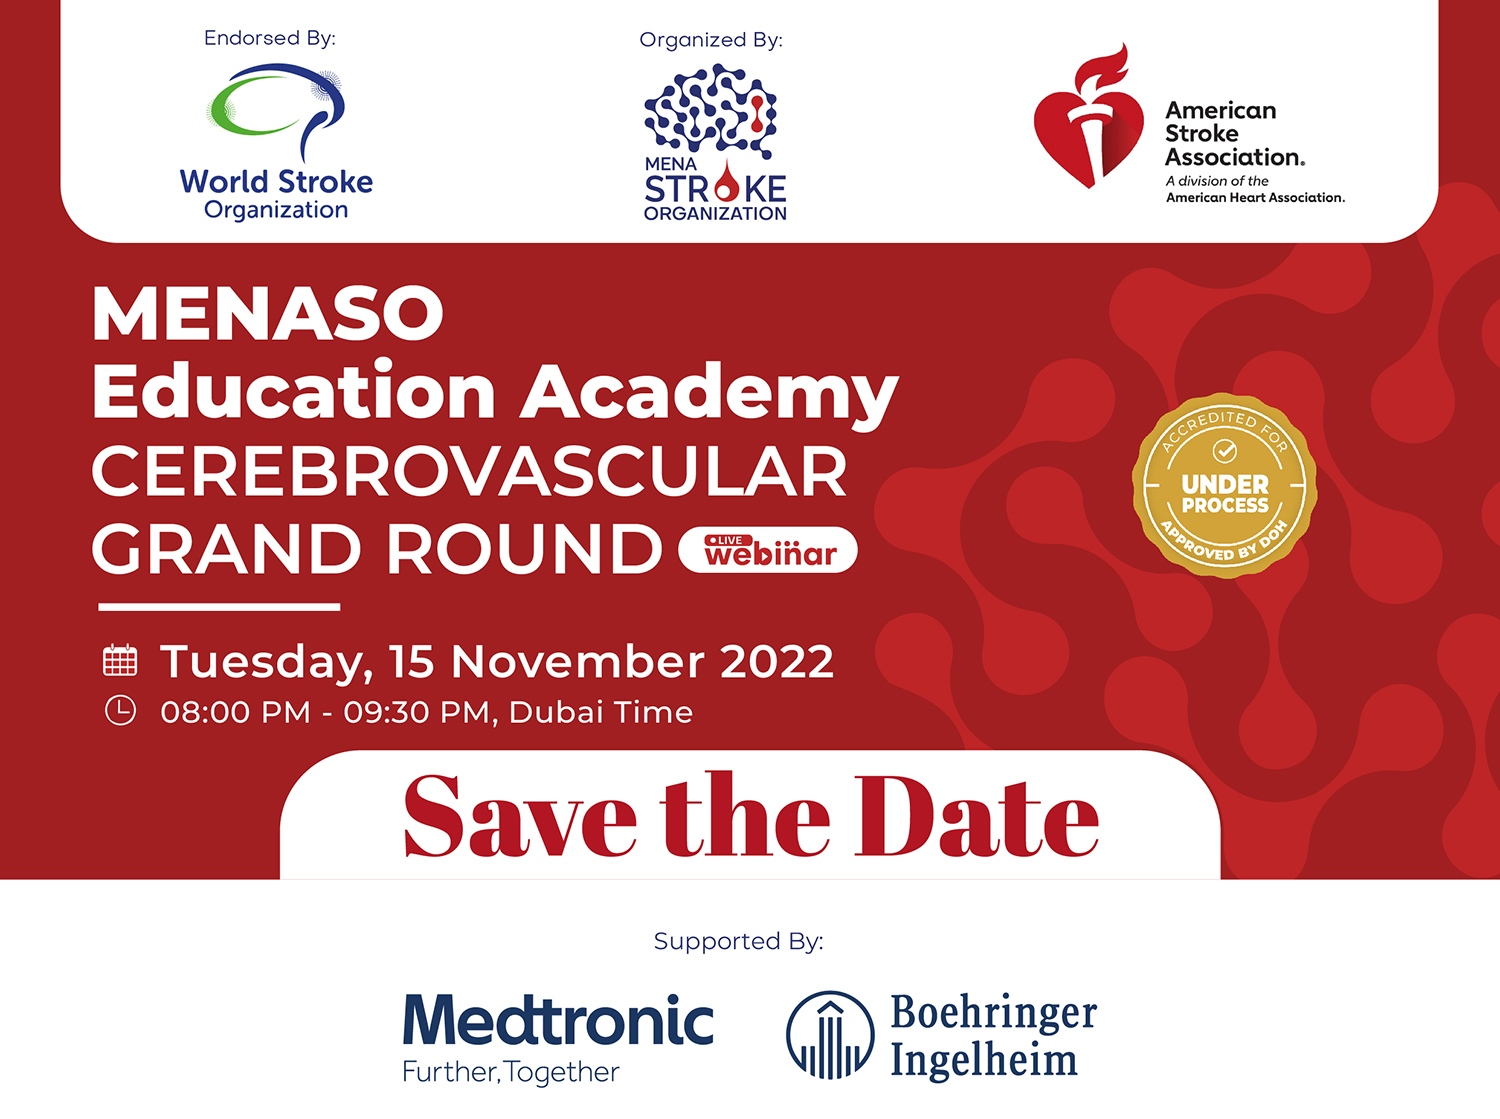 MENASO Education Academy Cerebrovascular Grand Round, November 2022